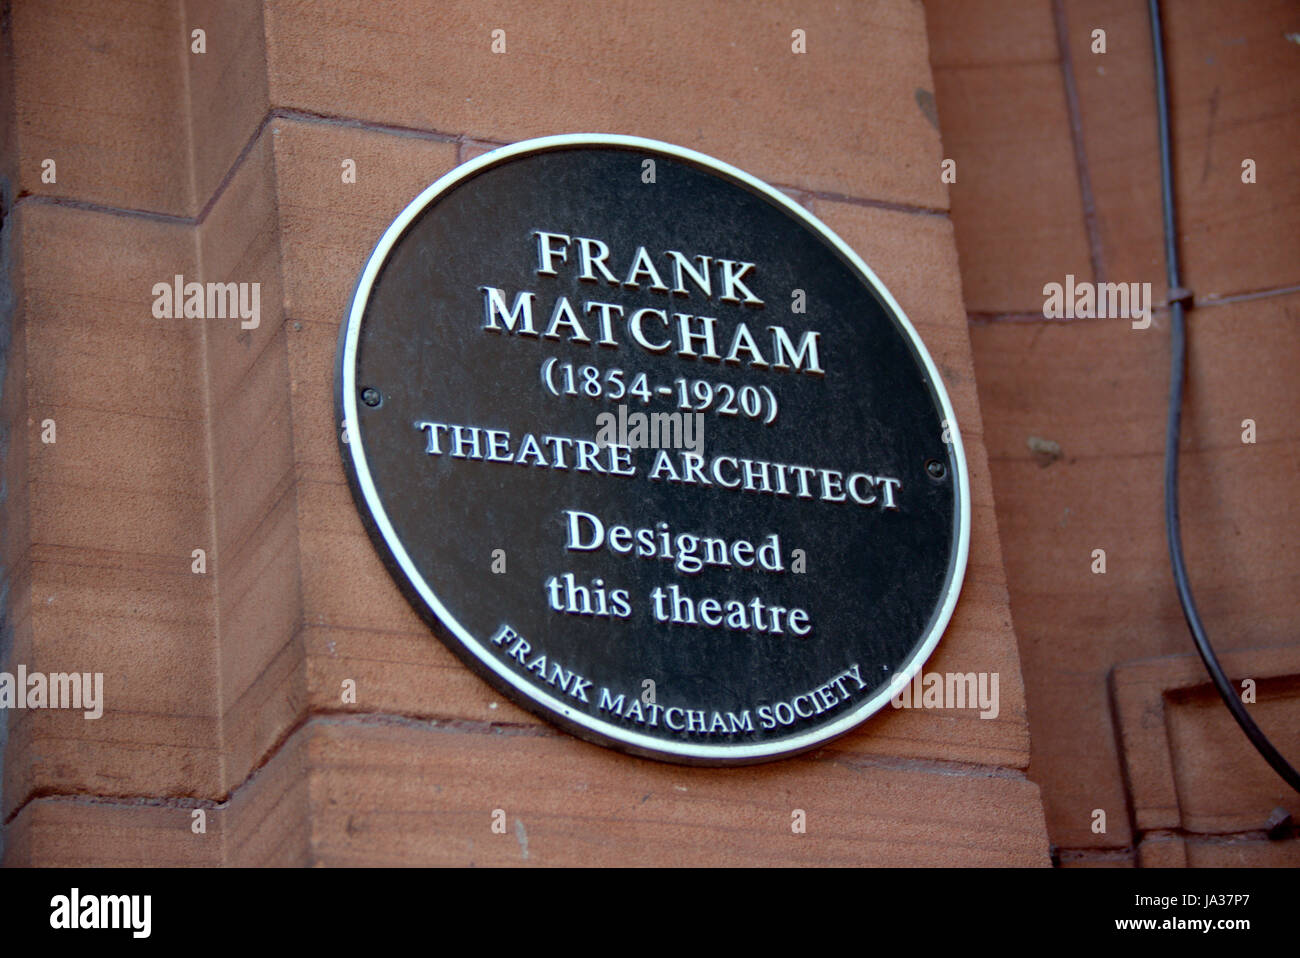 King's Theatre Glasgow architect Frank Matcham plaque Stock Photo